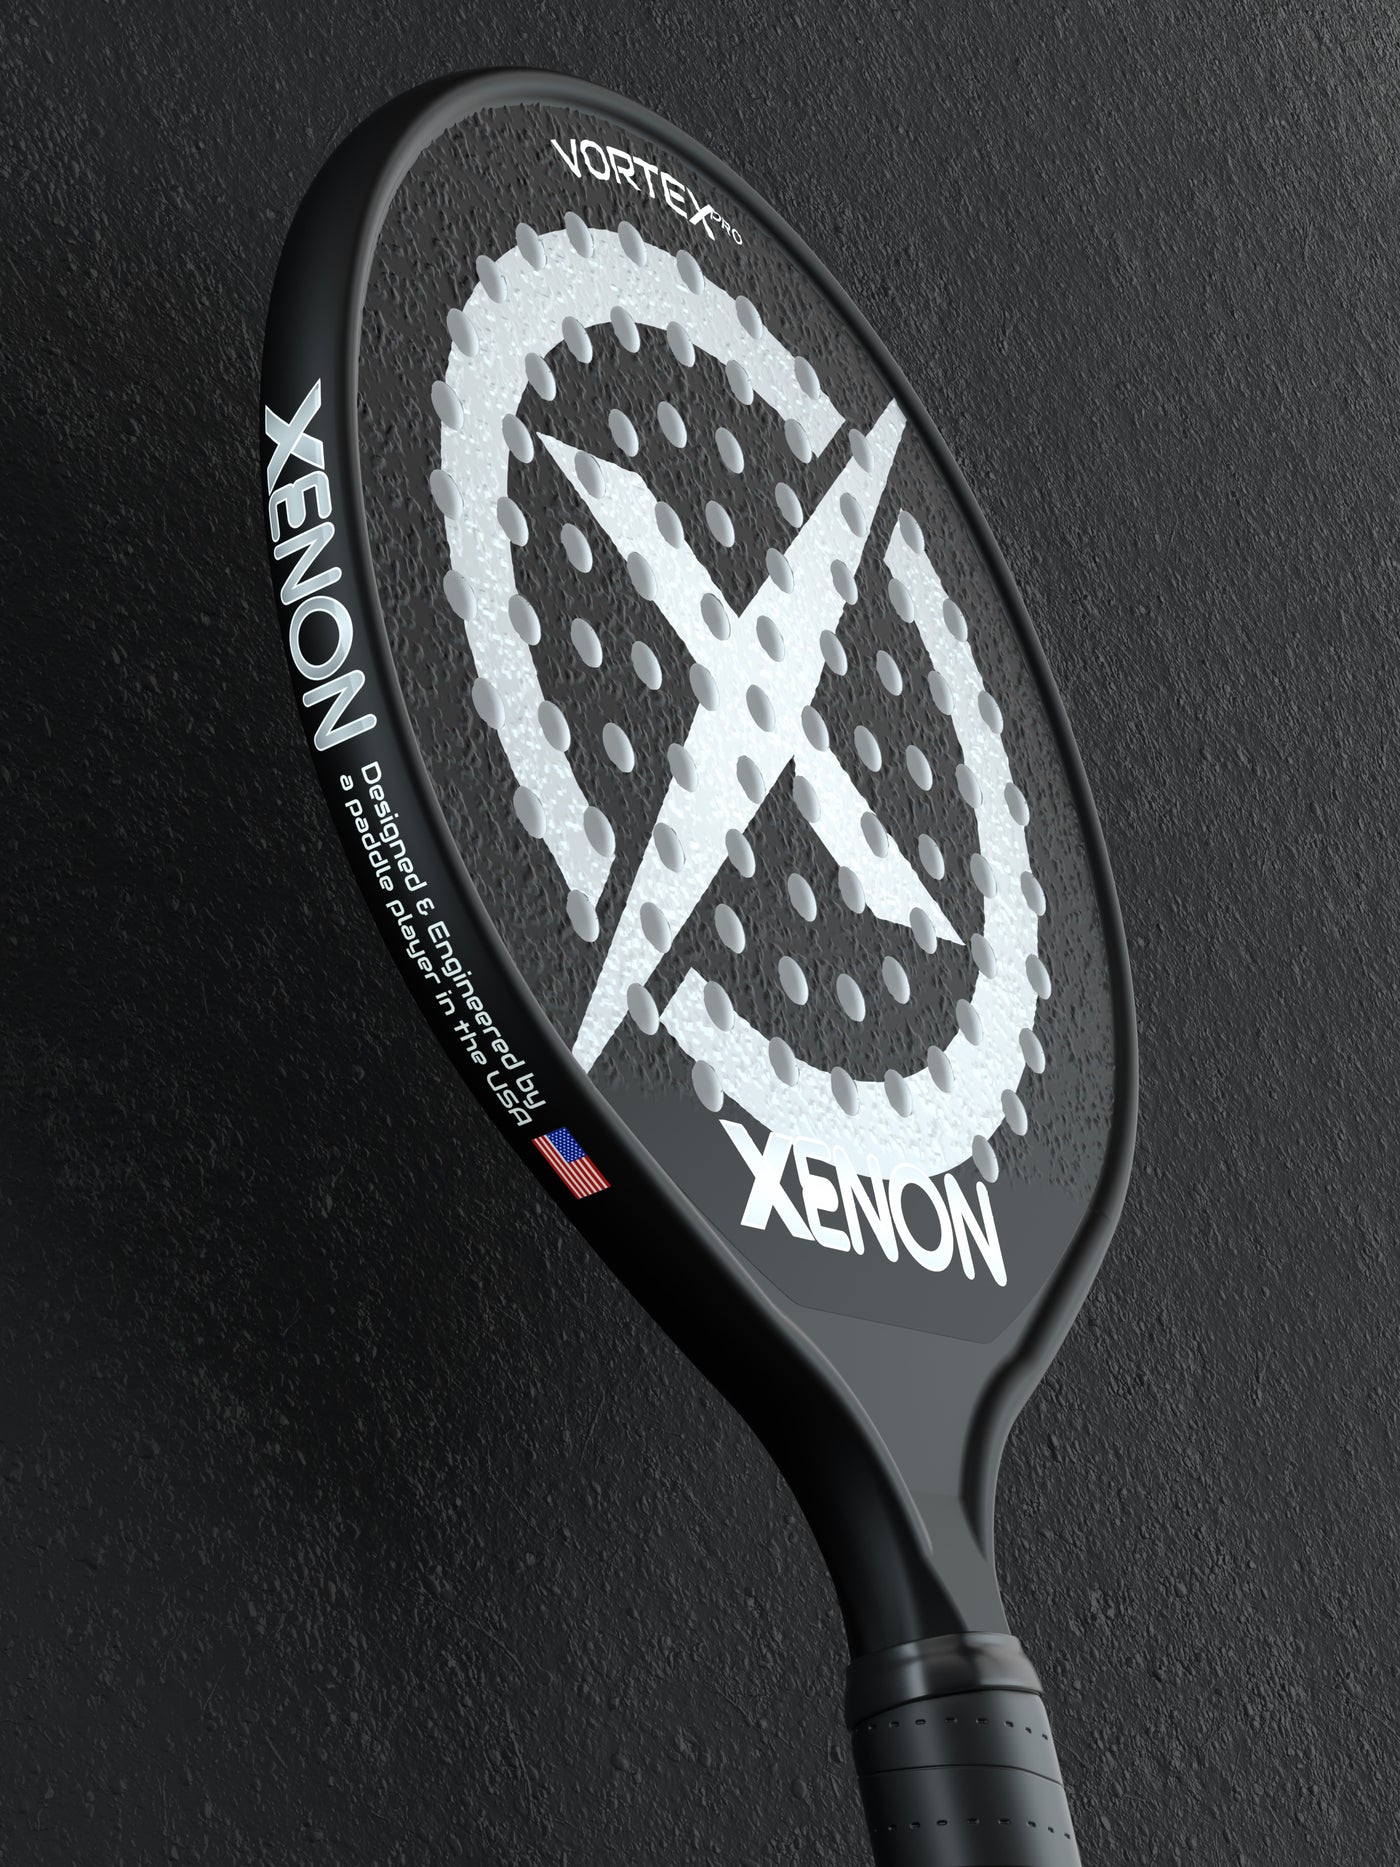 Xenon Paddle Tennis Racket Vortex Pro Model Font Side